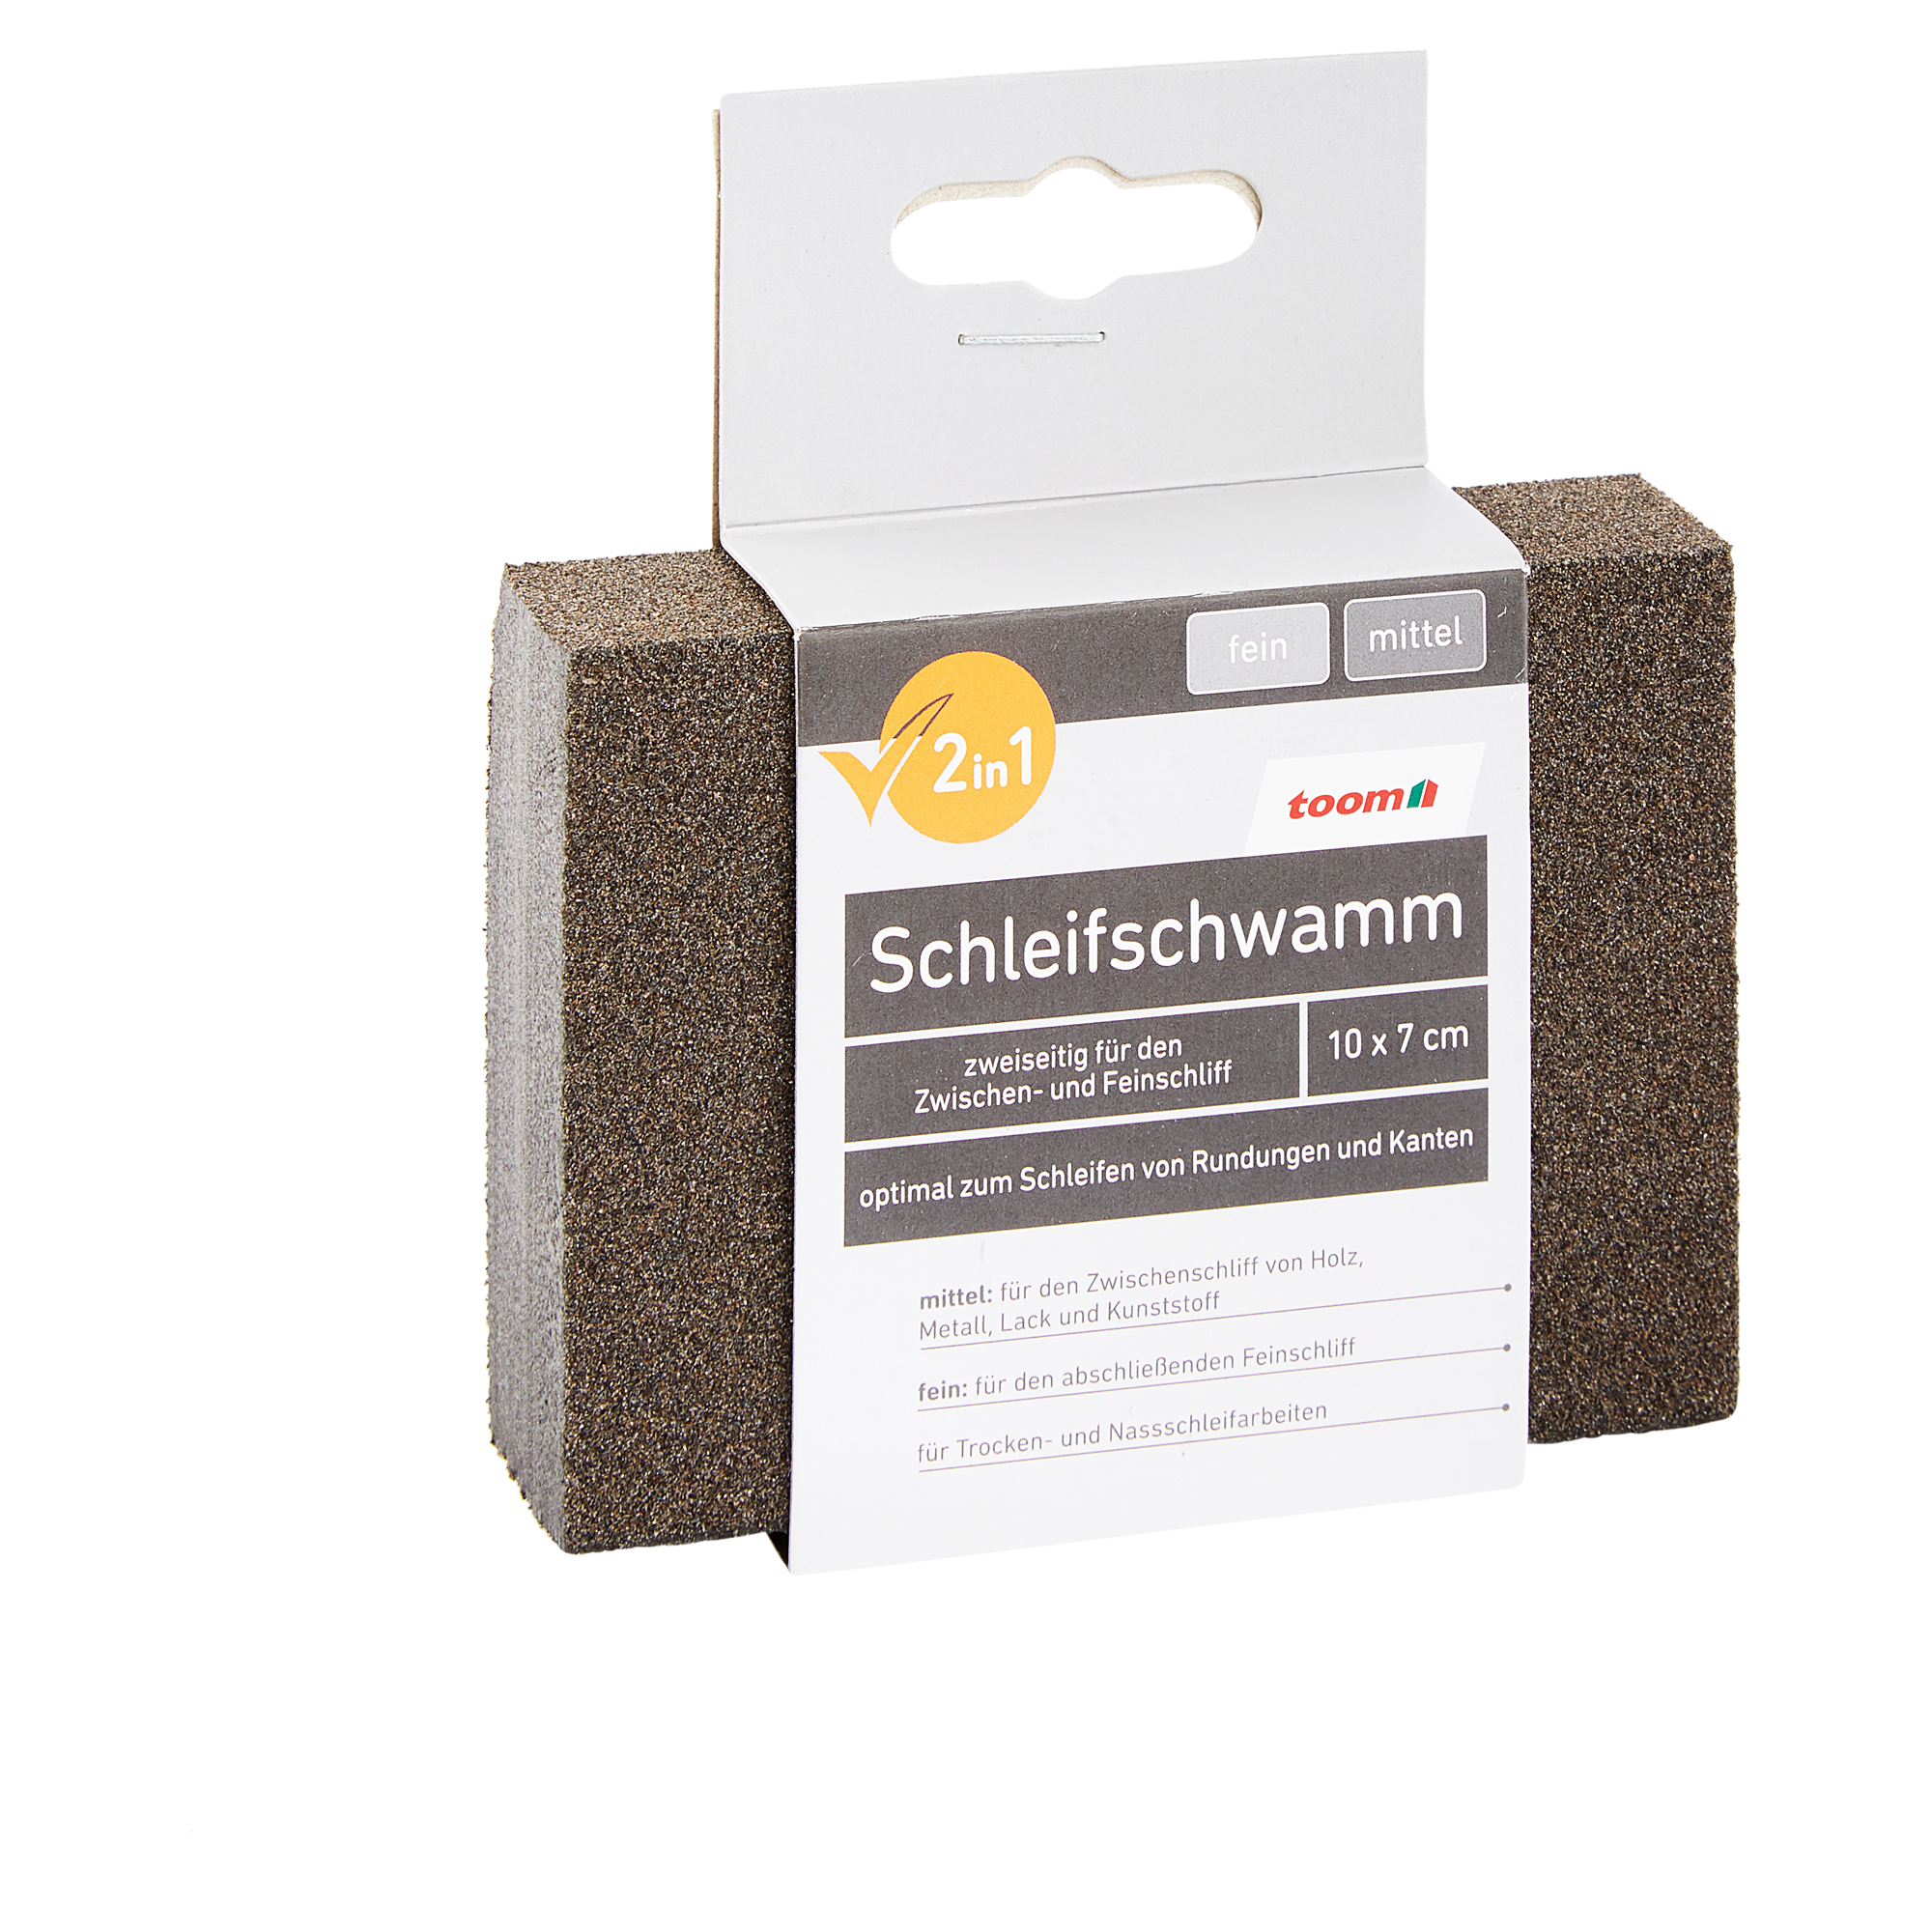 Schleifschwamm 10x7 cm + product picture